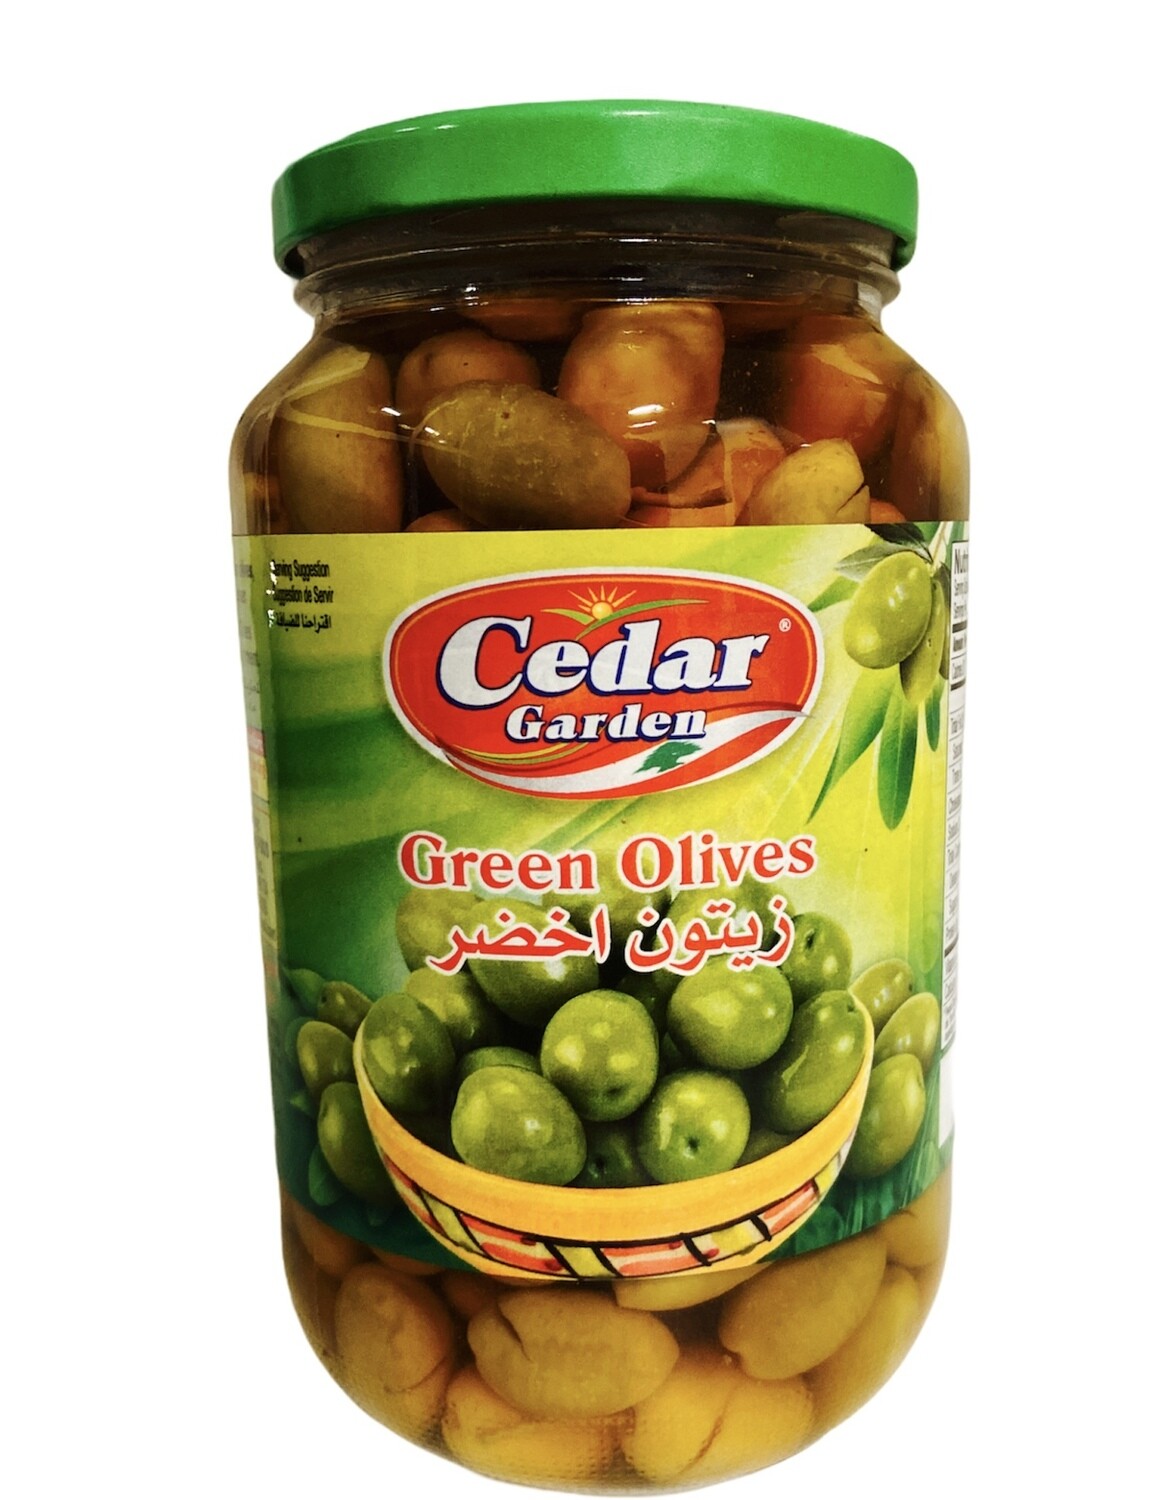 Cedar Garden Green Olives 12x900g